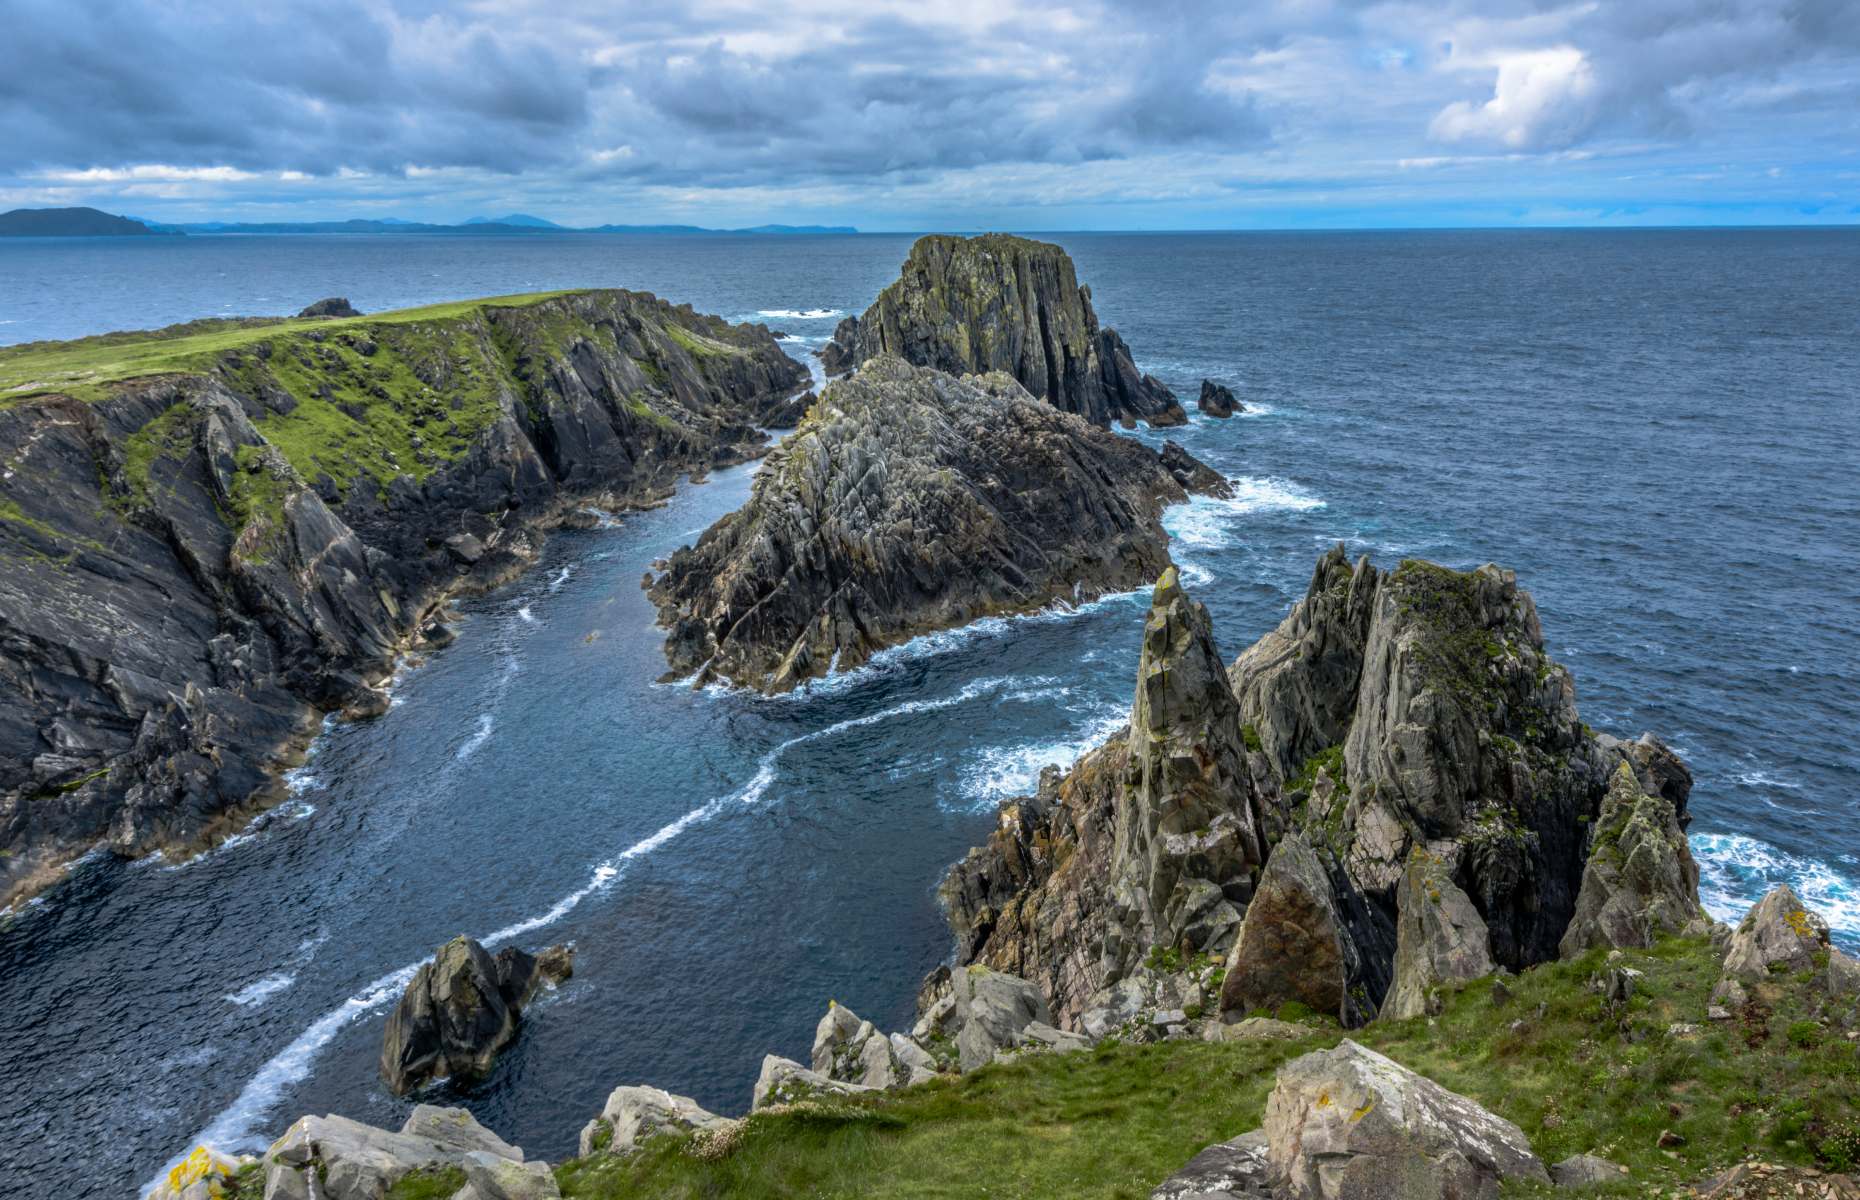 Malin Head, County Donegal, Ireland (Image: CA Irene Lorenz/Shutterstock)